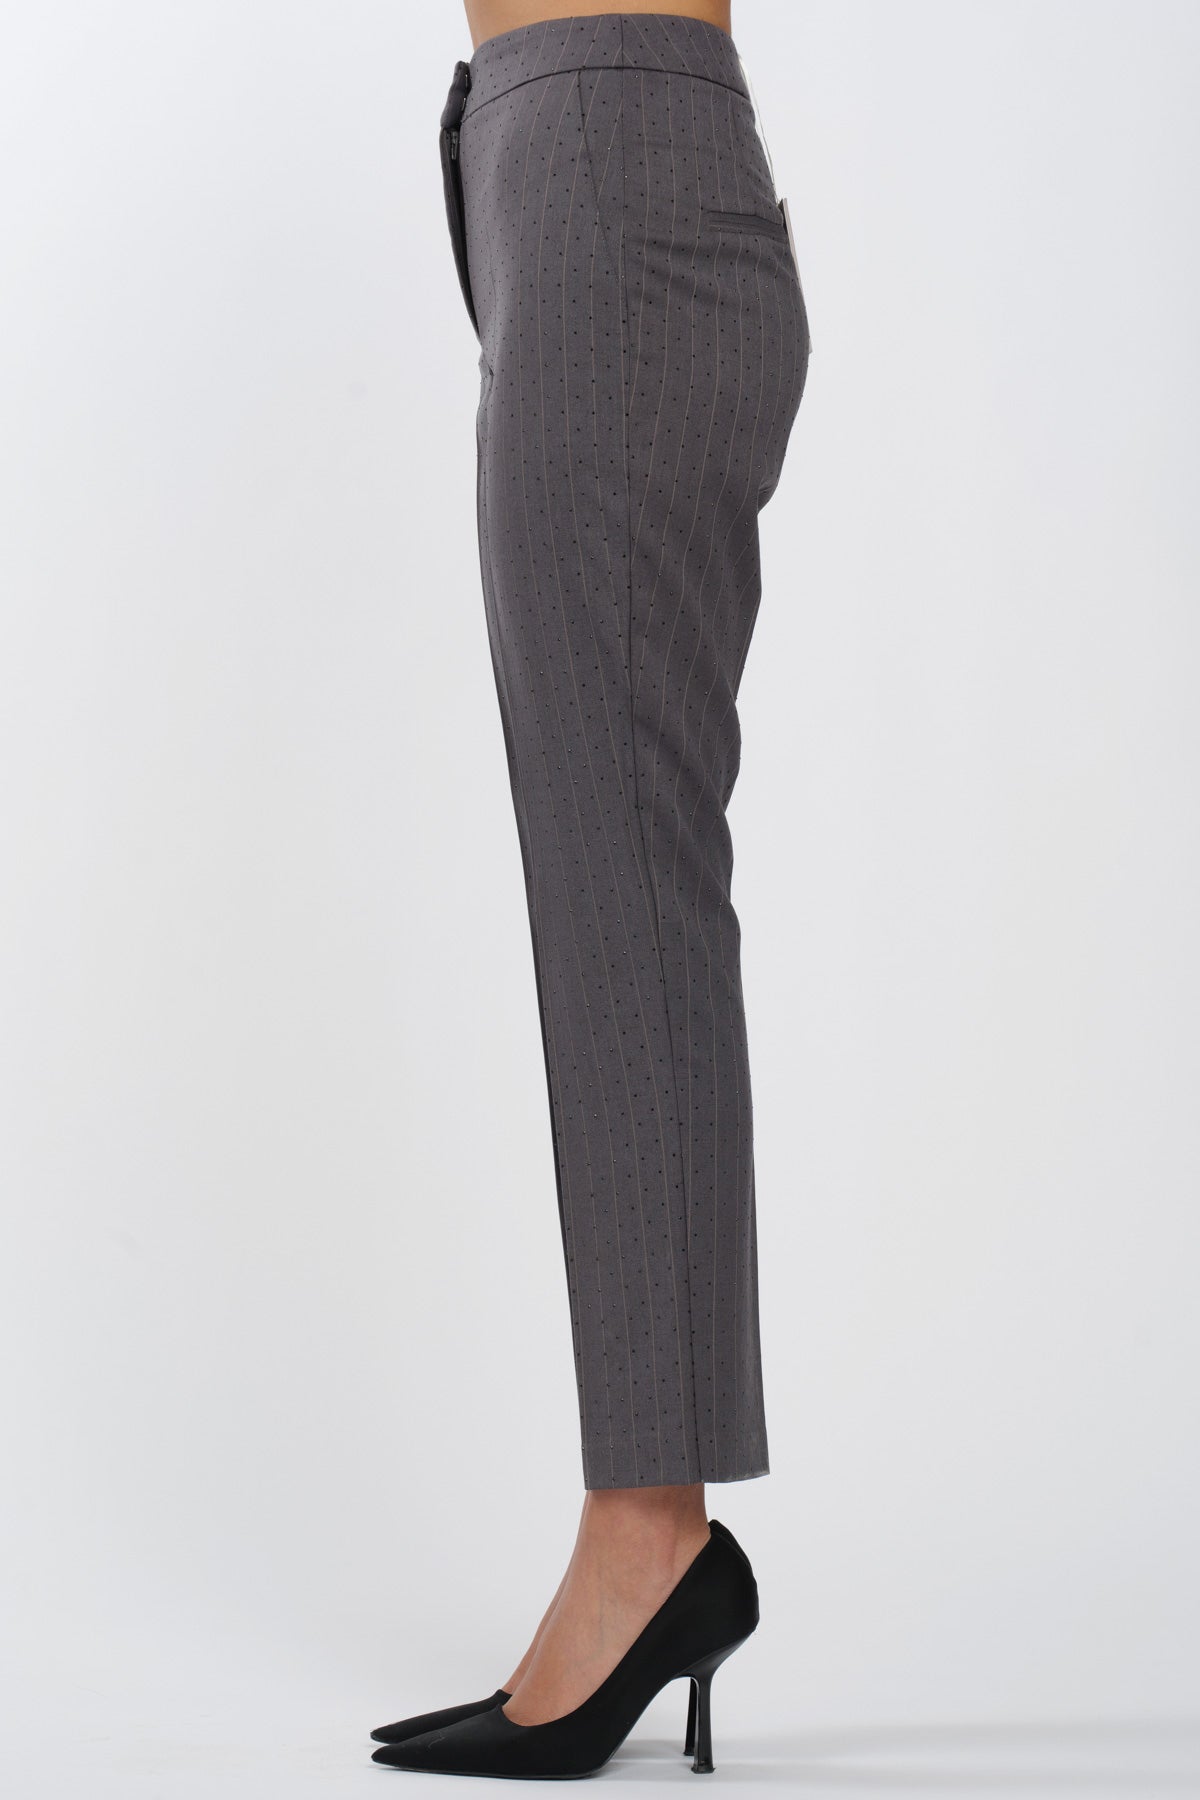 Basic Gray Rhinestone Pinstripe Pants